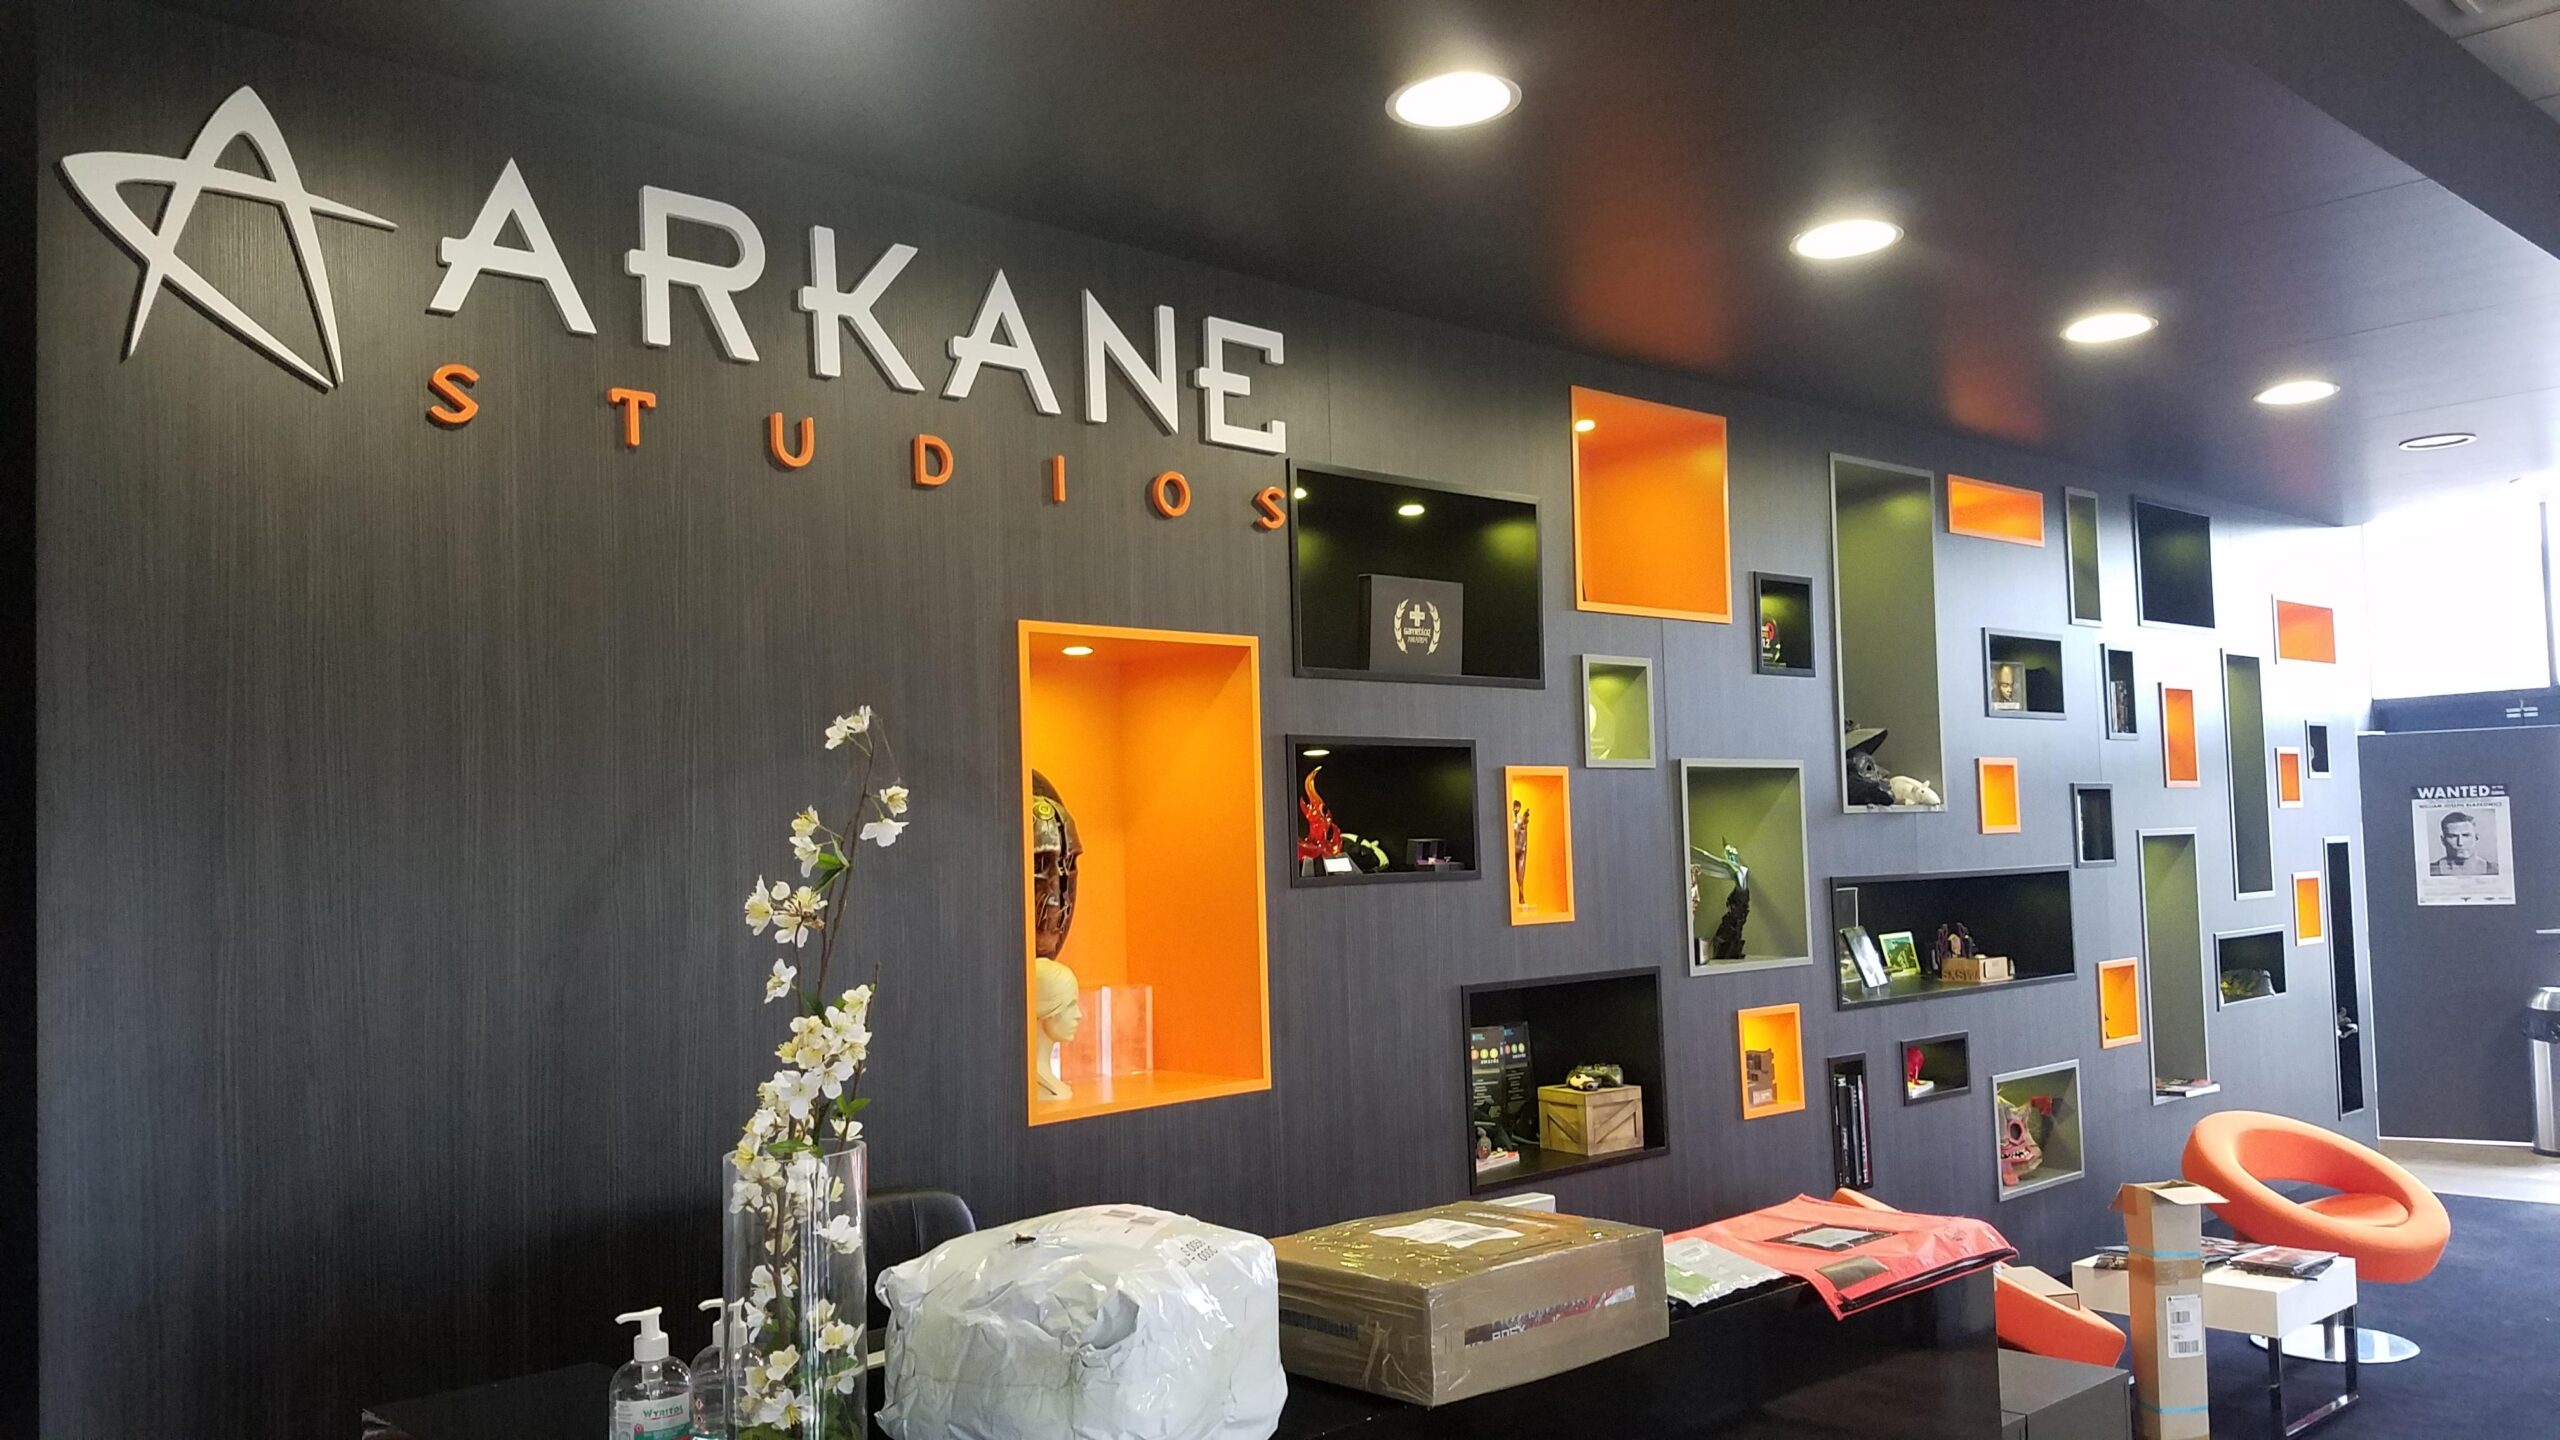 arkane studios